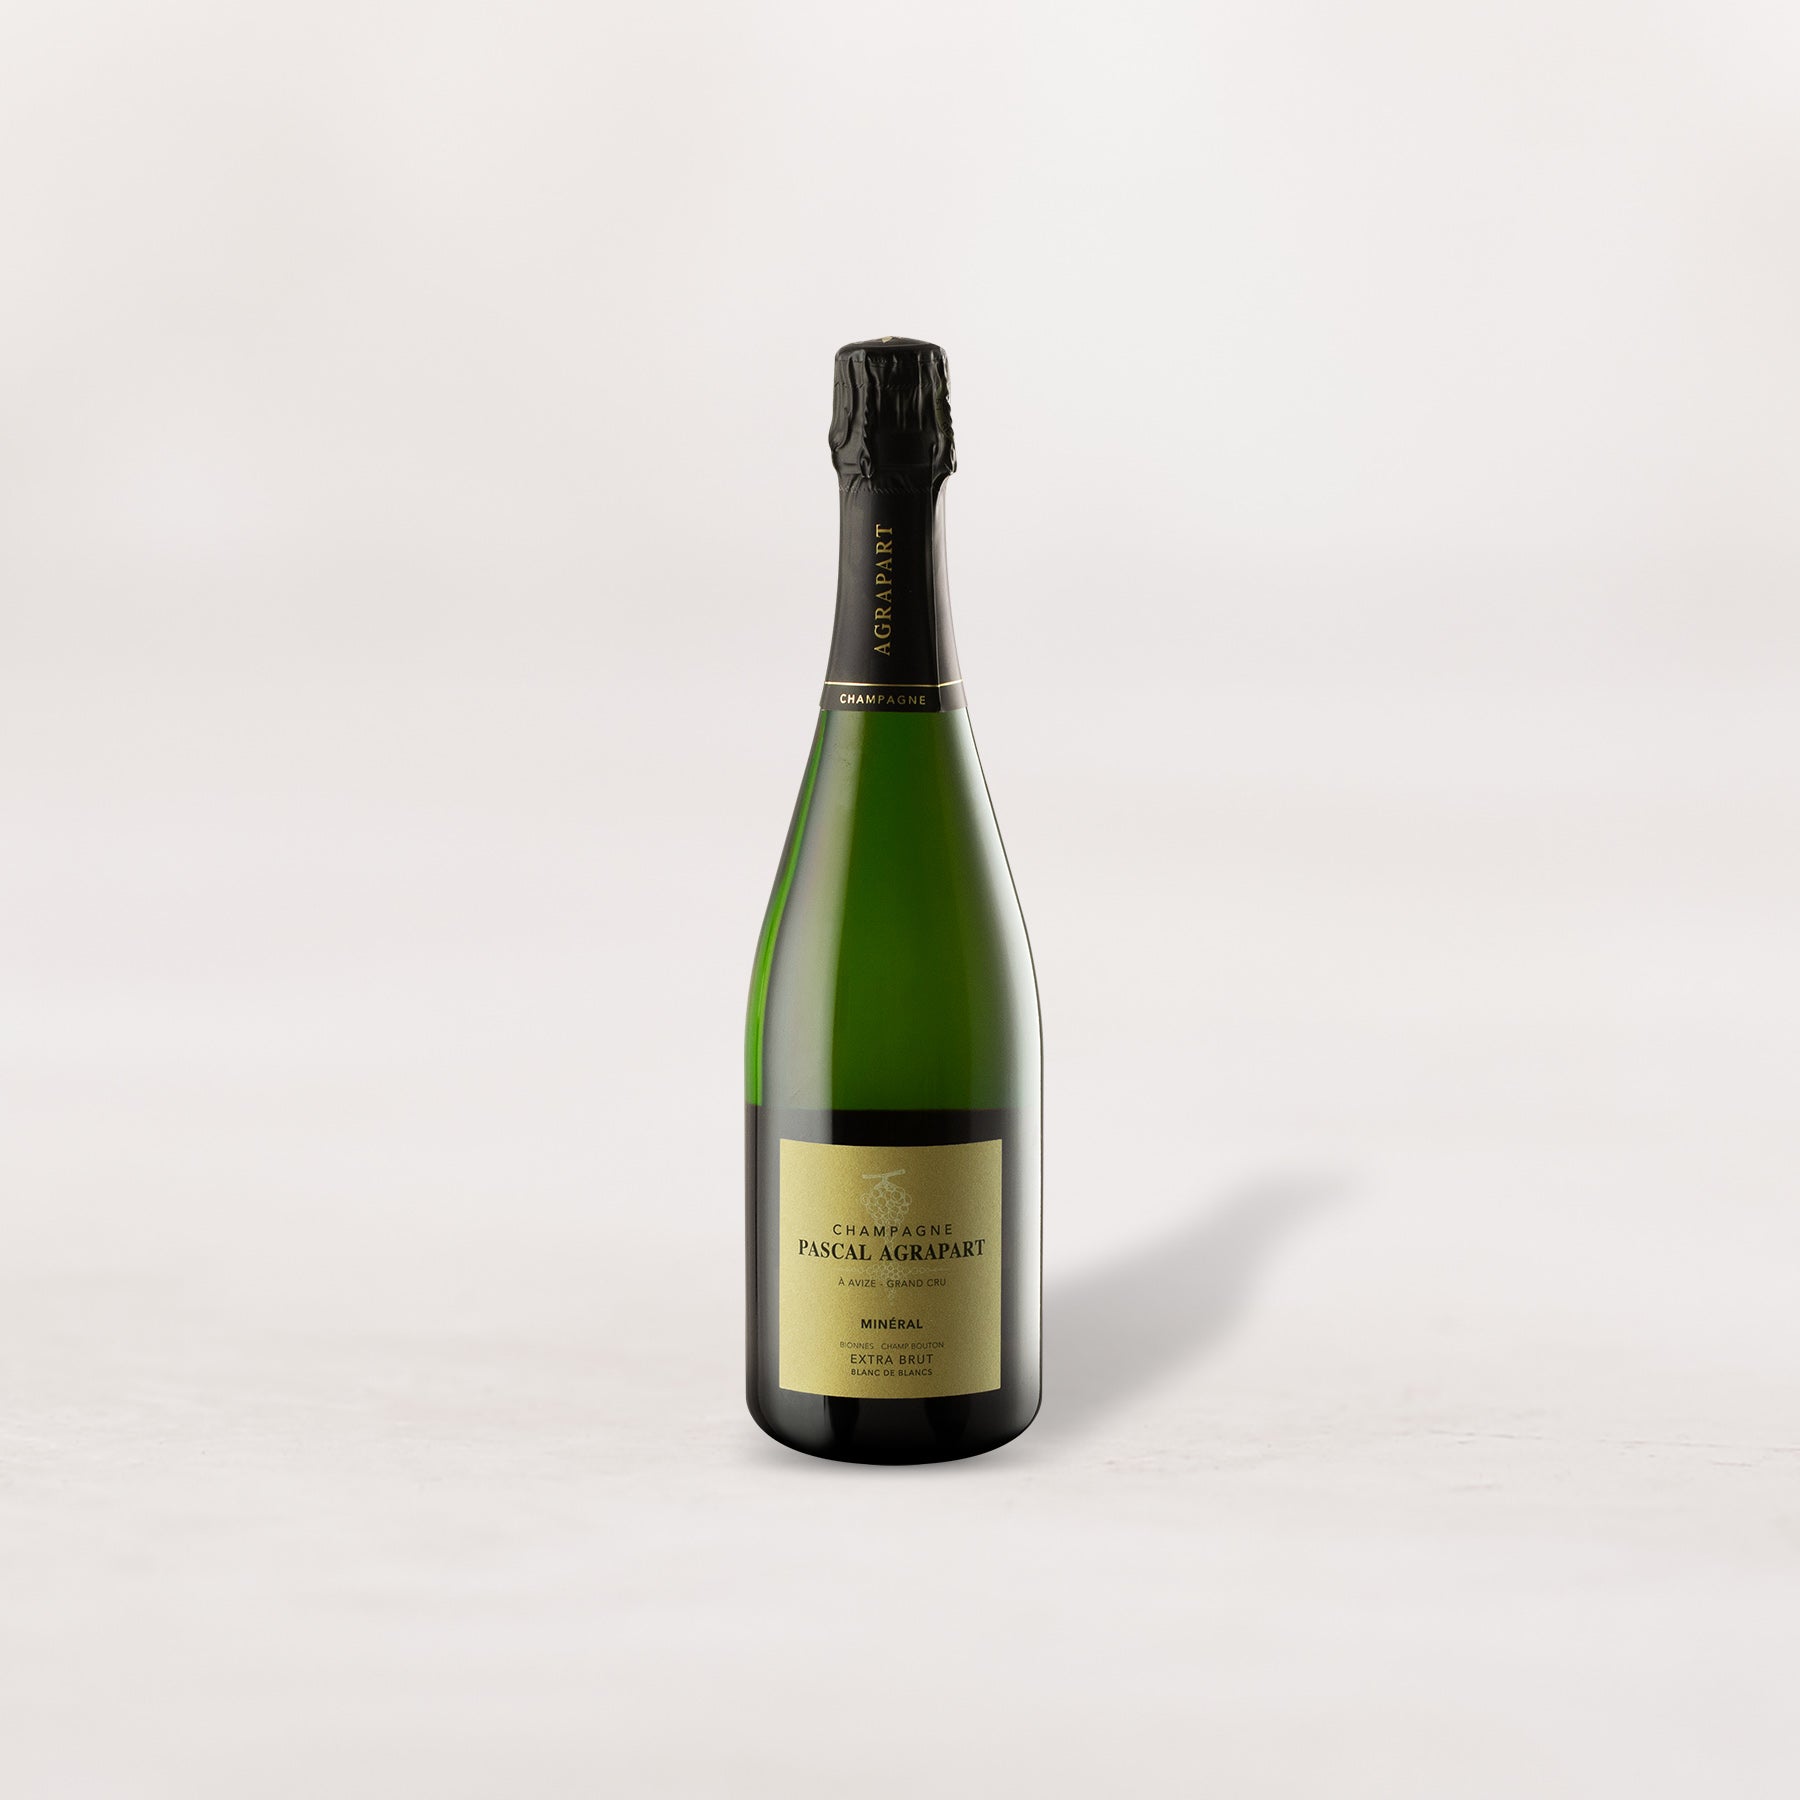 Champagne Pascal Agrapart, "Minéral" Blanc de Blancs Grand Cru Extra Brut